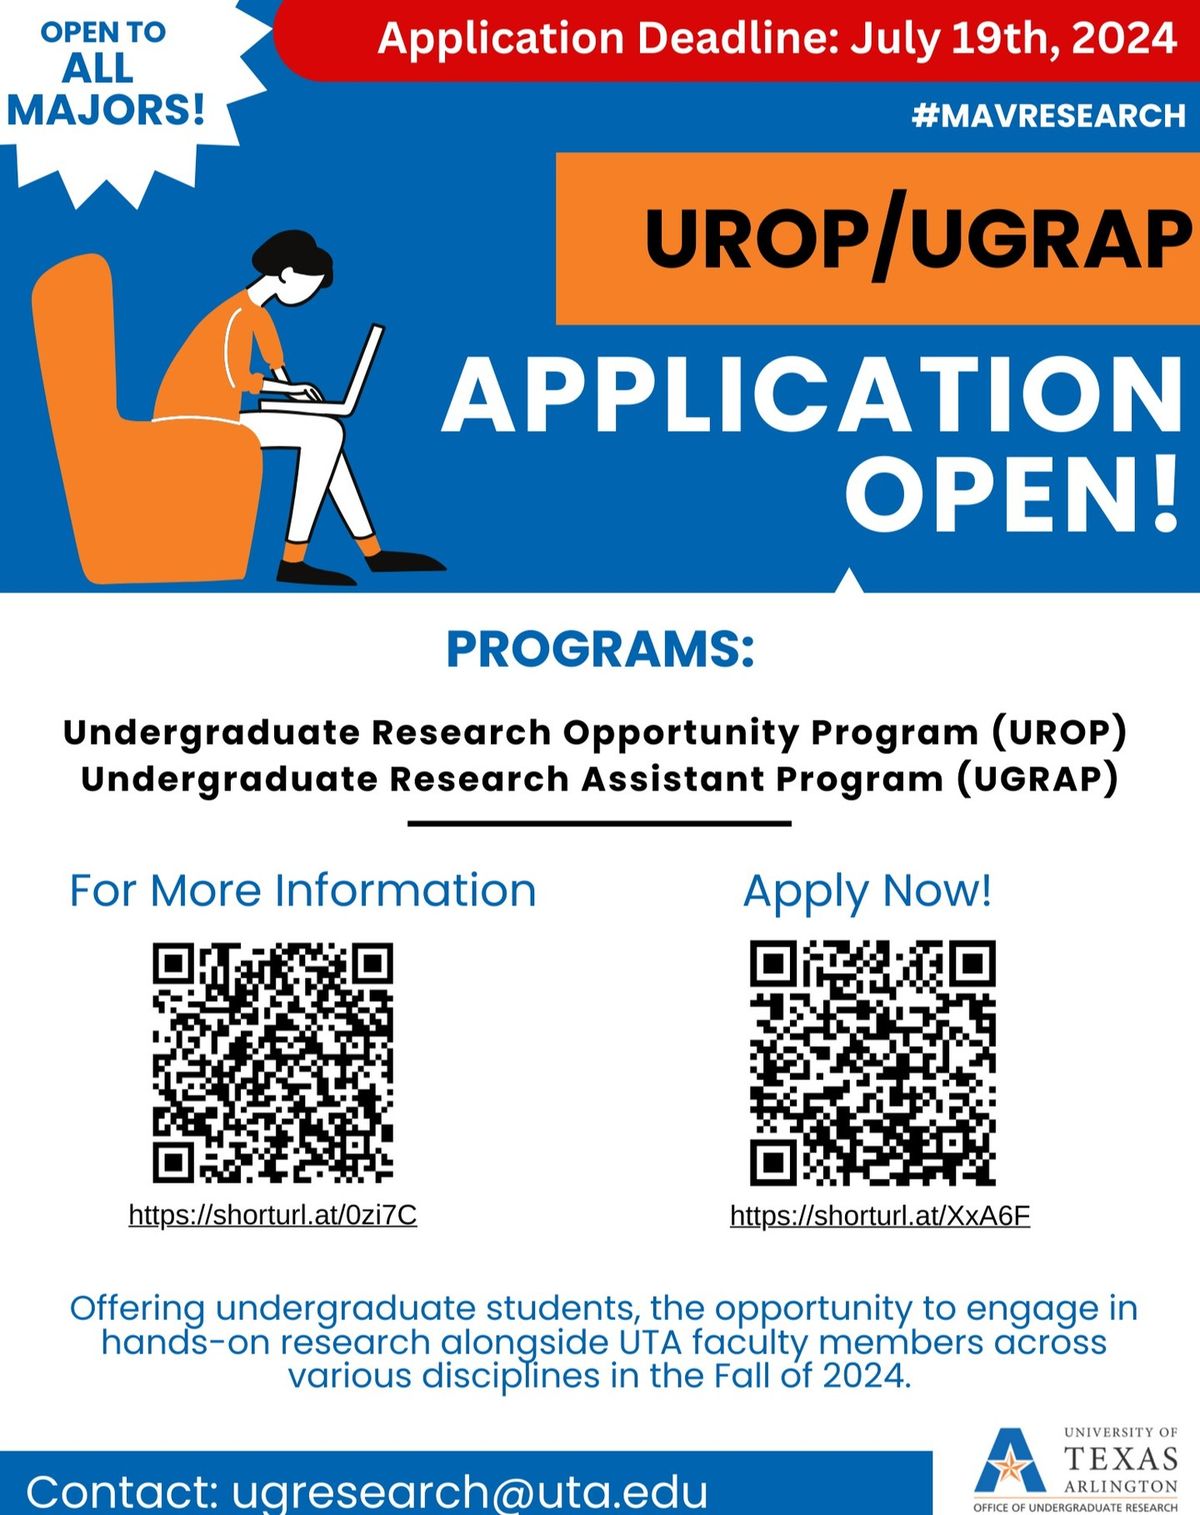 Undergraduate Research Programs Application Deadline